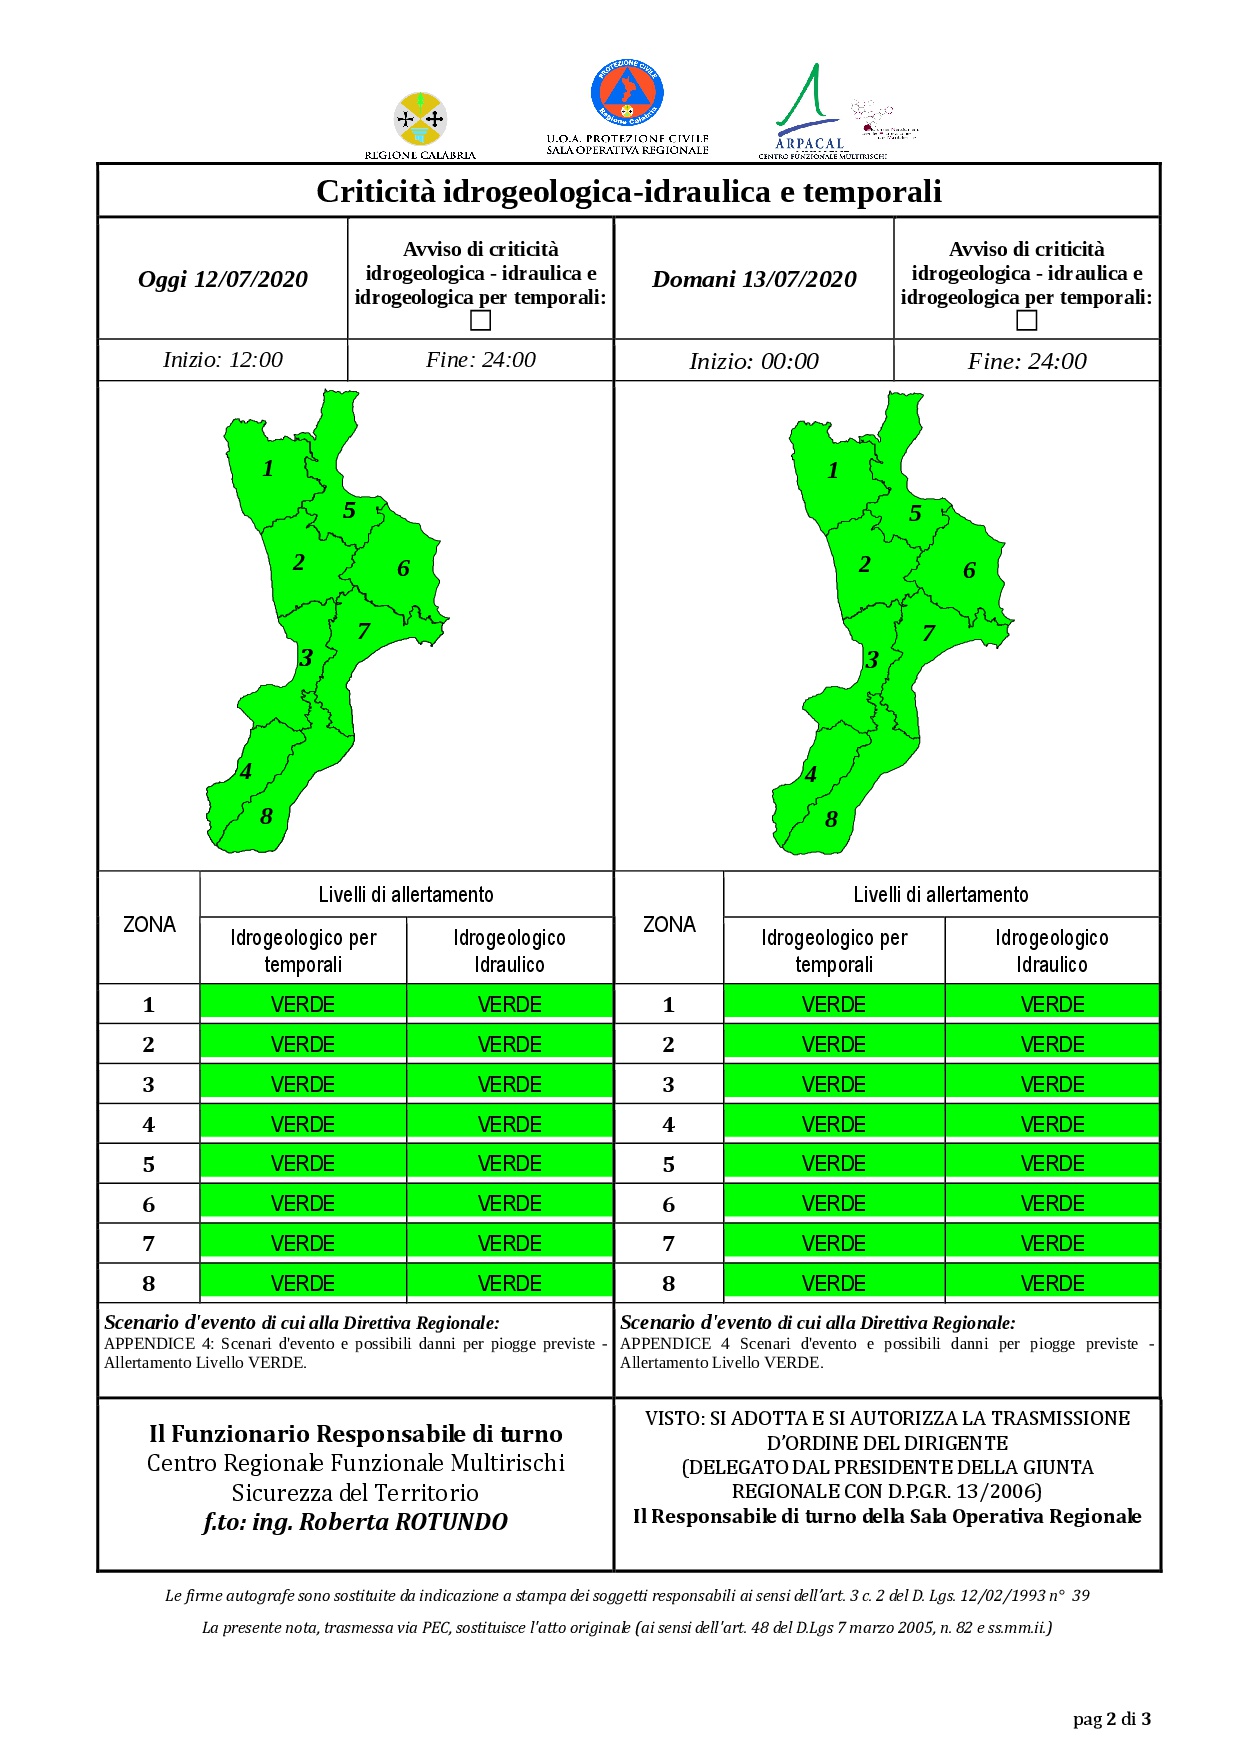 Criticità idrogeologica-idraulica e temporali in Calabria 12-07-2020